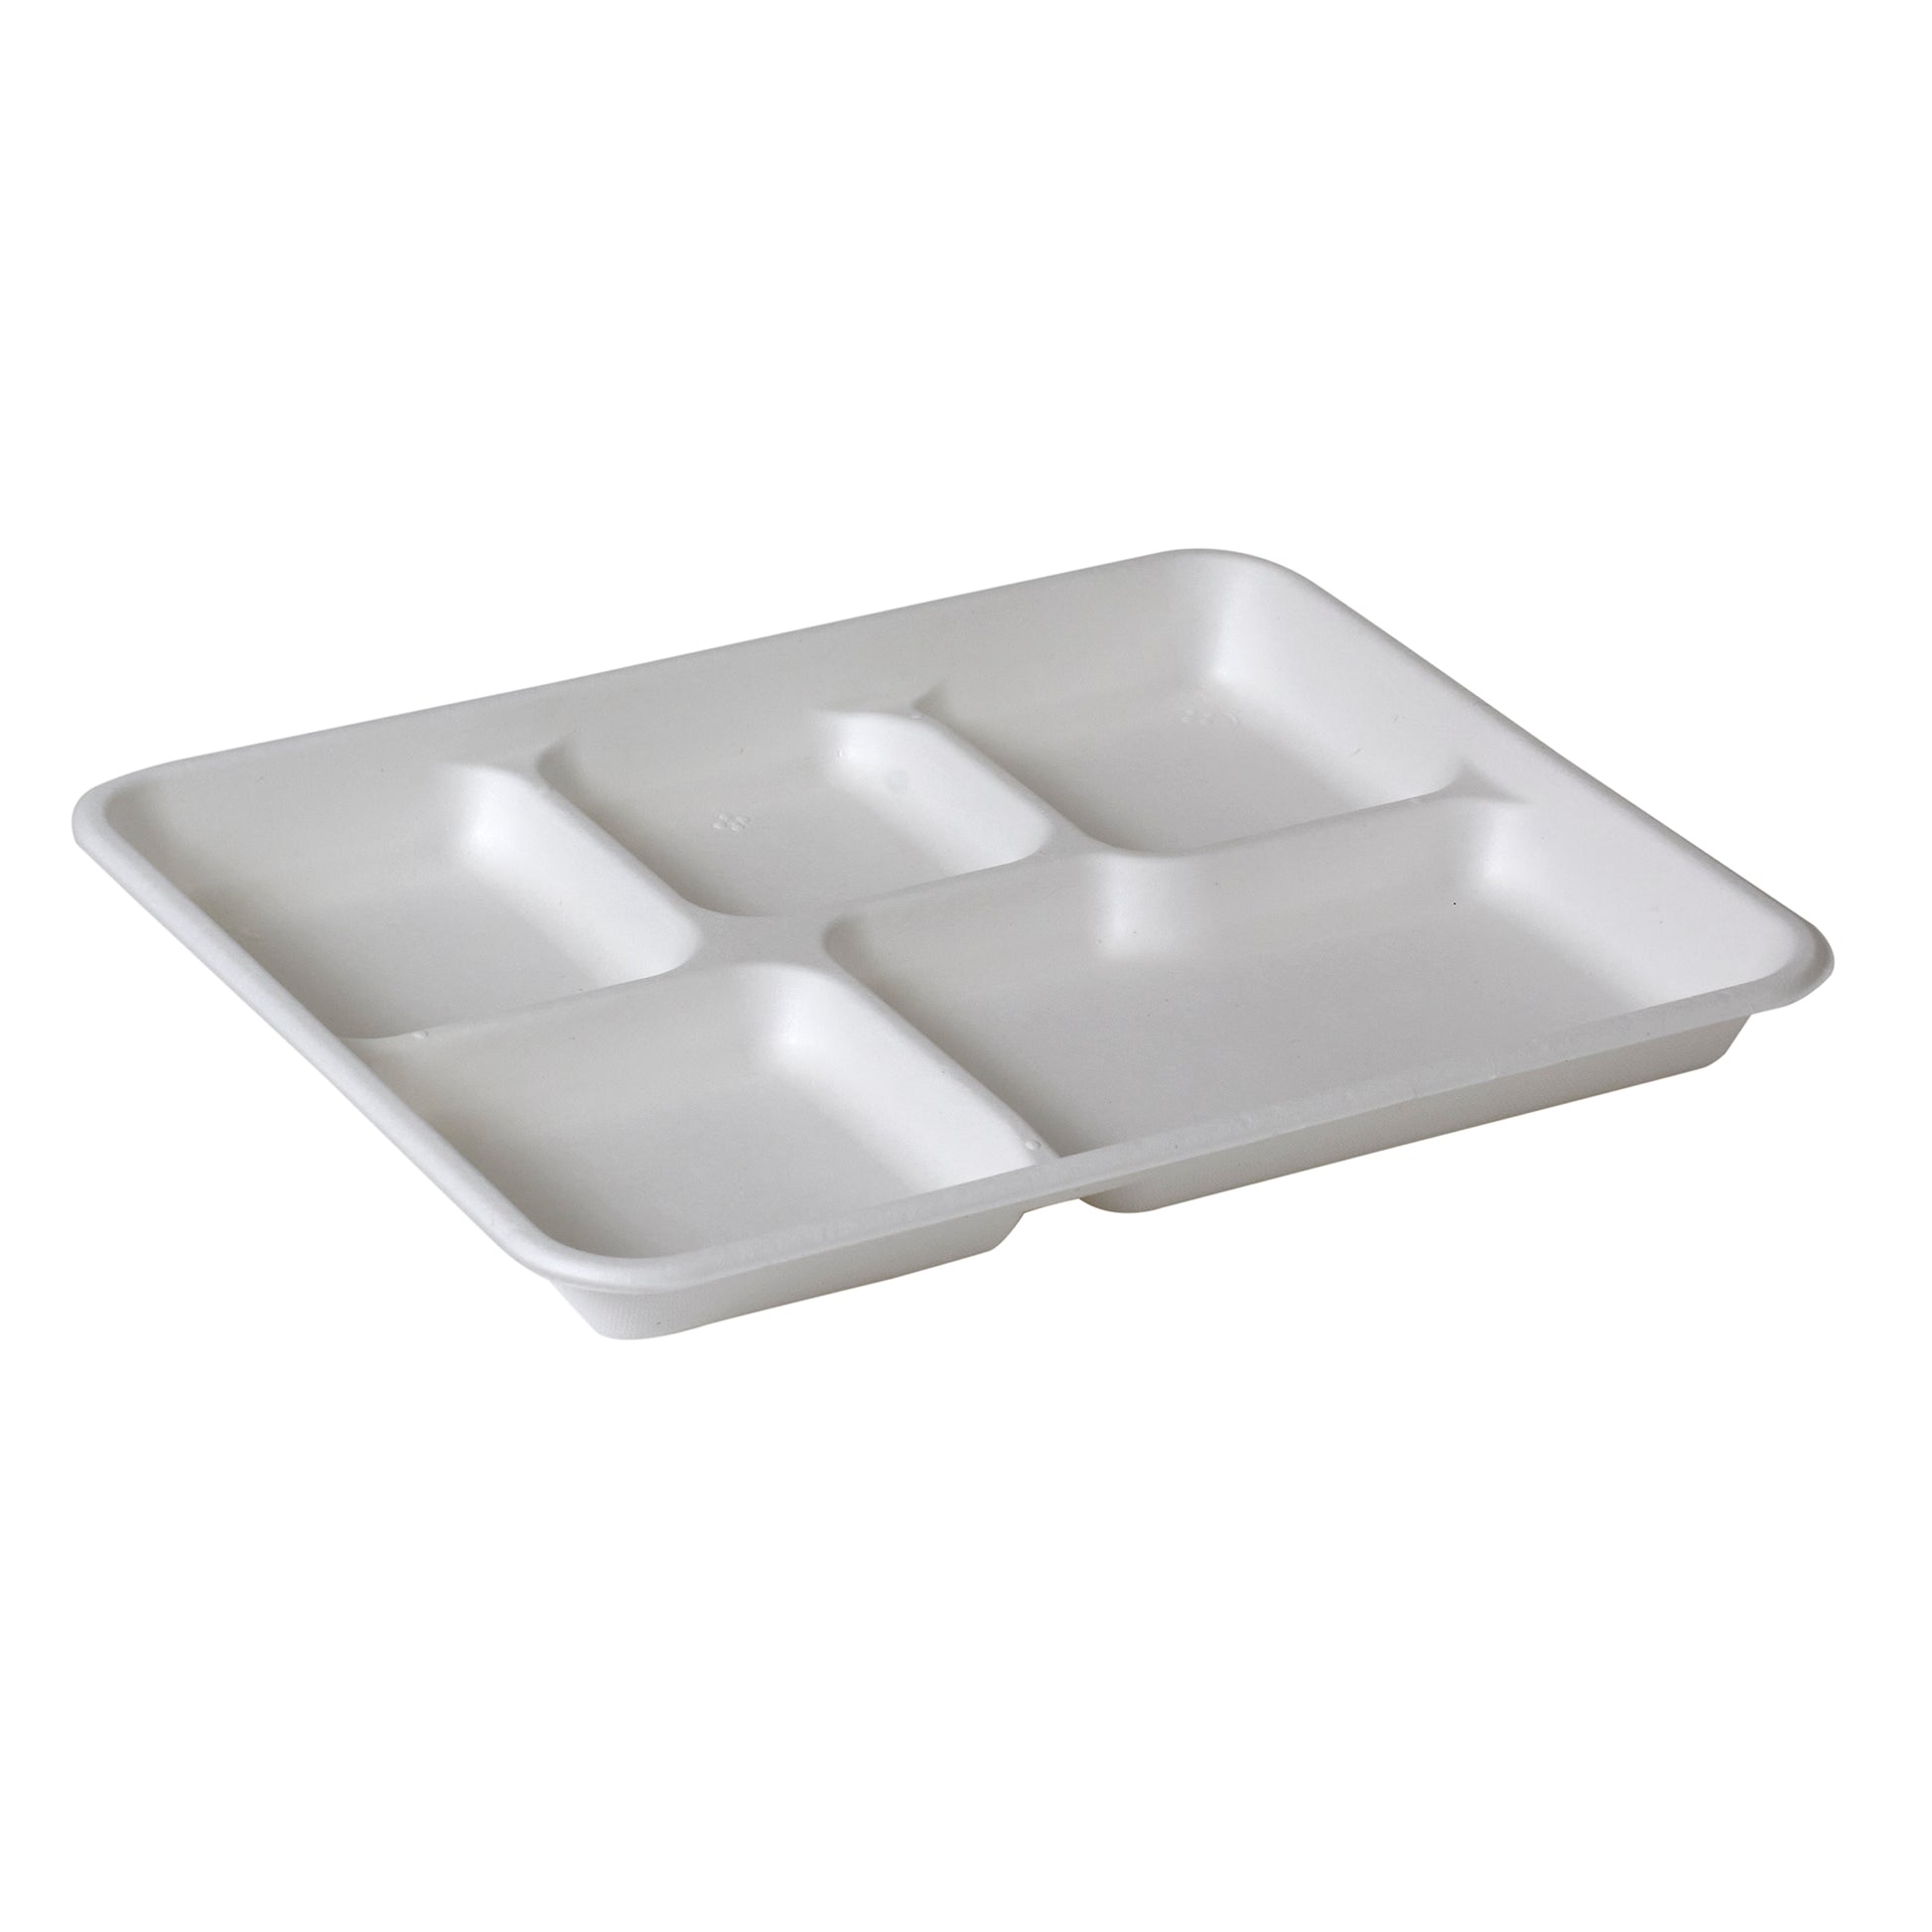 5 Compartment Foam Plates